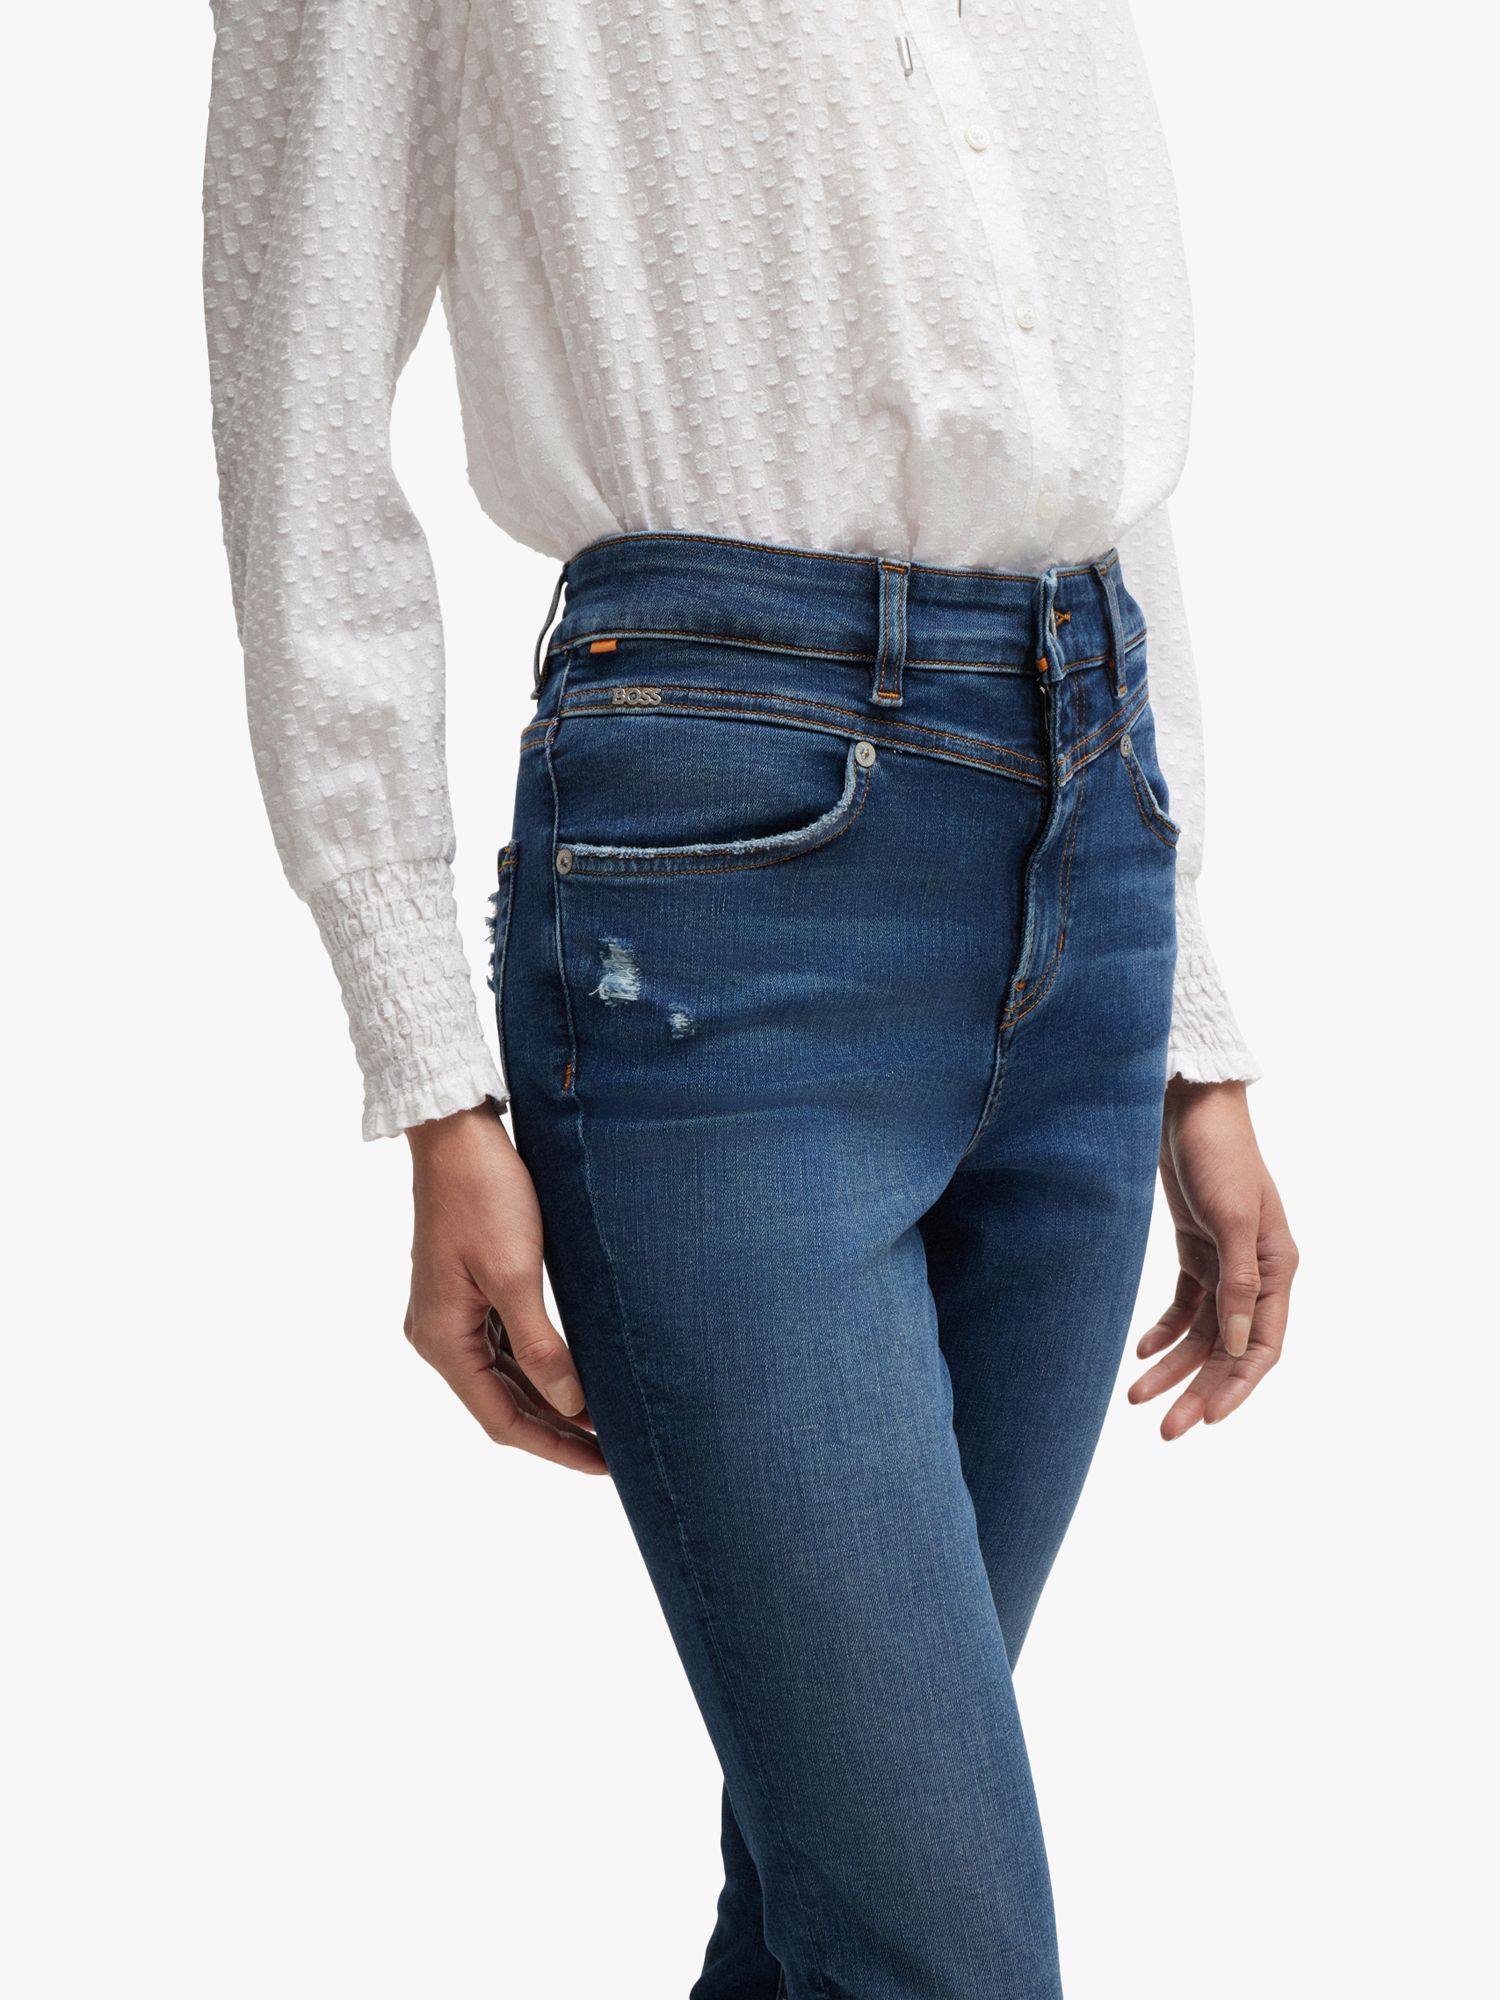 BOSS Cotton Blend Skinny Jeans, Navy, 28